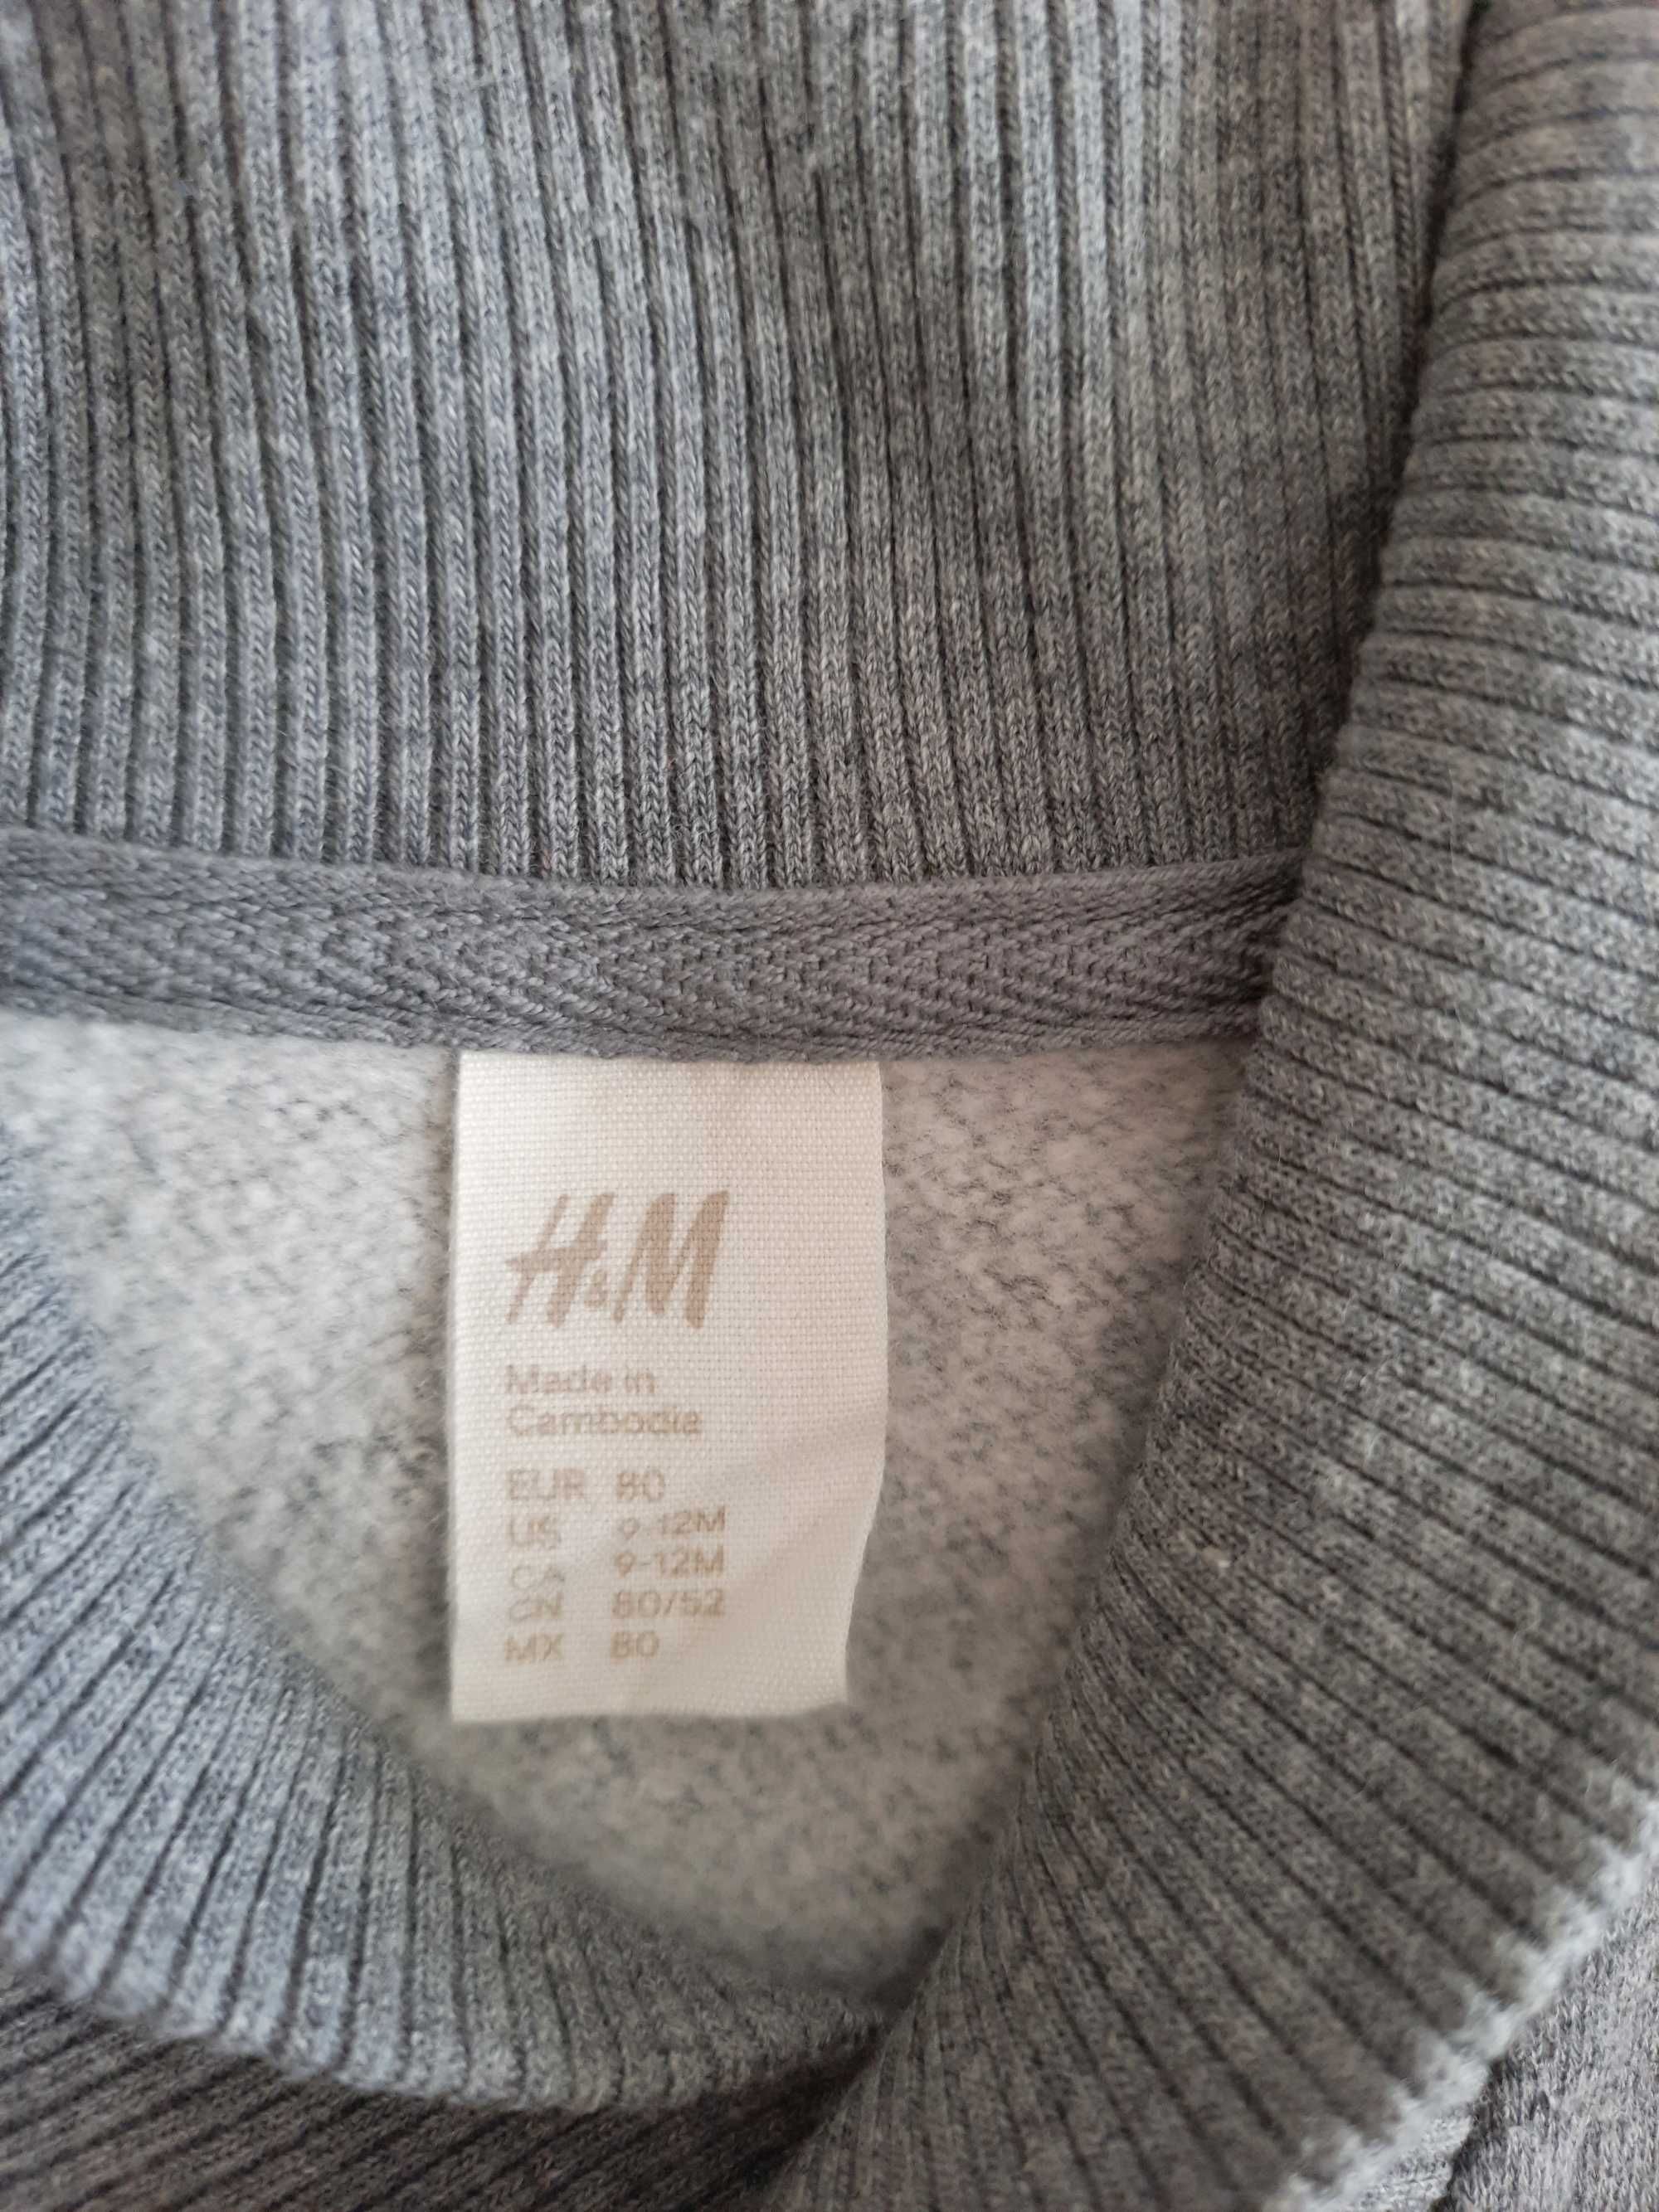 Bluza dres dresik sweterek H&M roz. 80, 9-12M, SUPER STAN